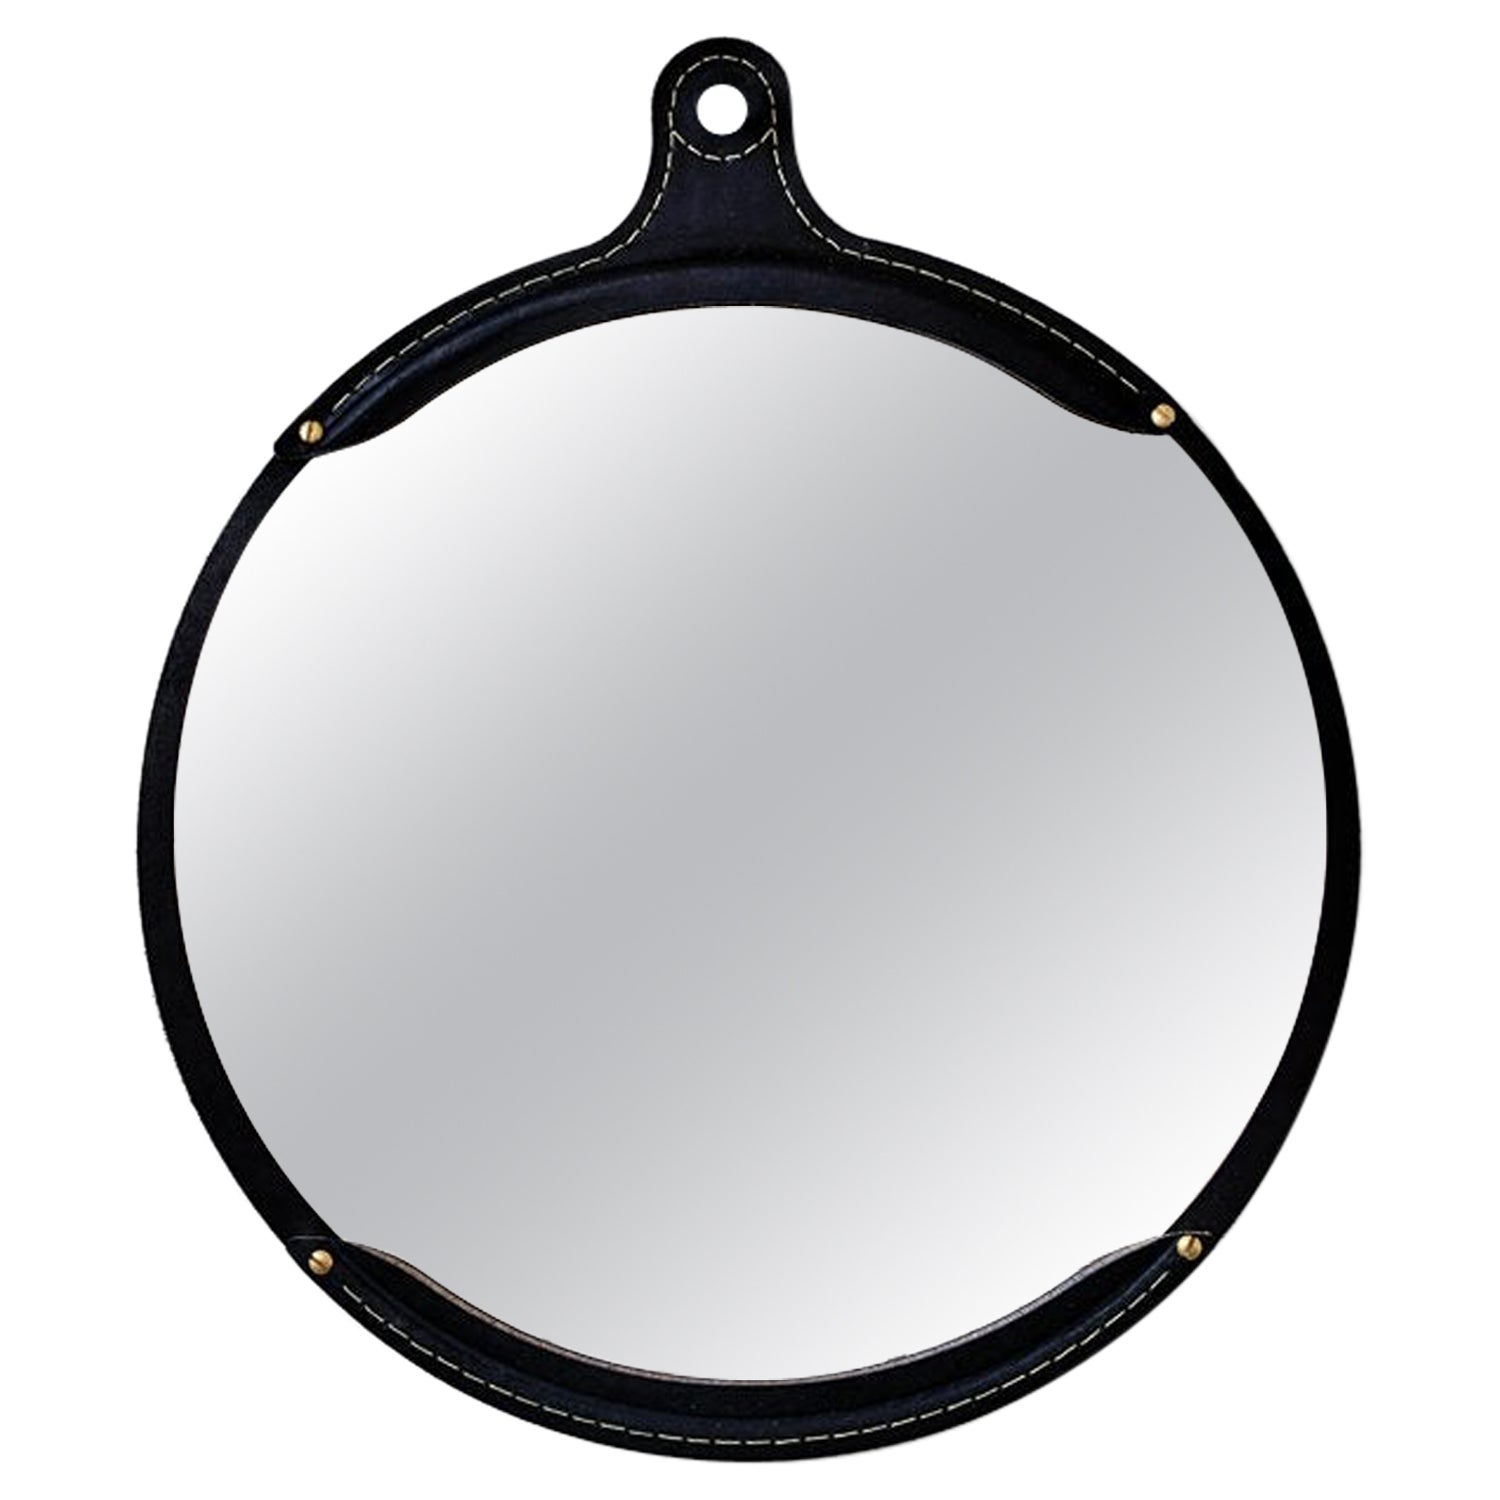 Moderner moderner runder Fairmount-Spiegel aus schwarzem Leder